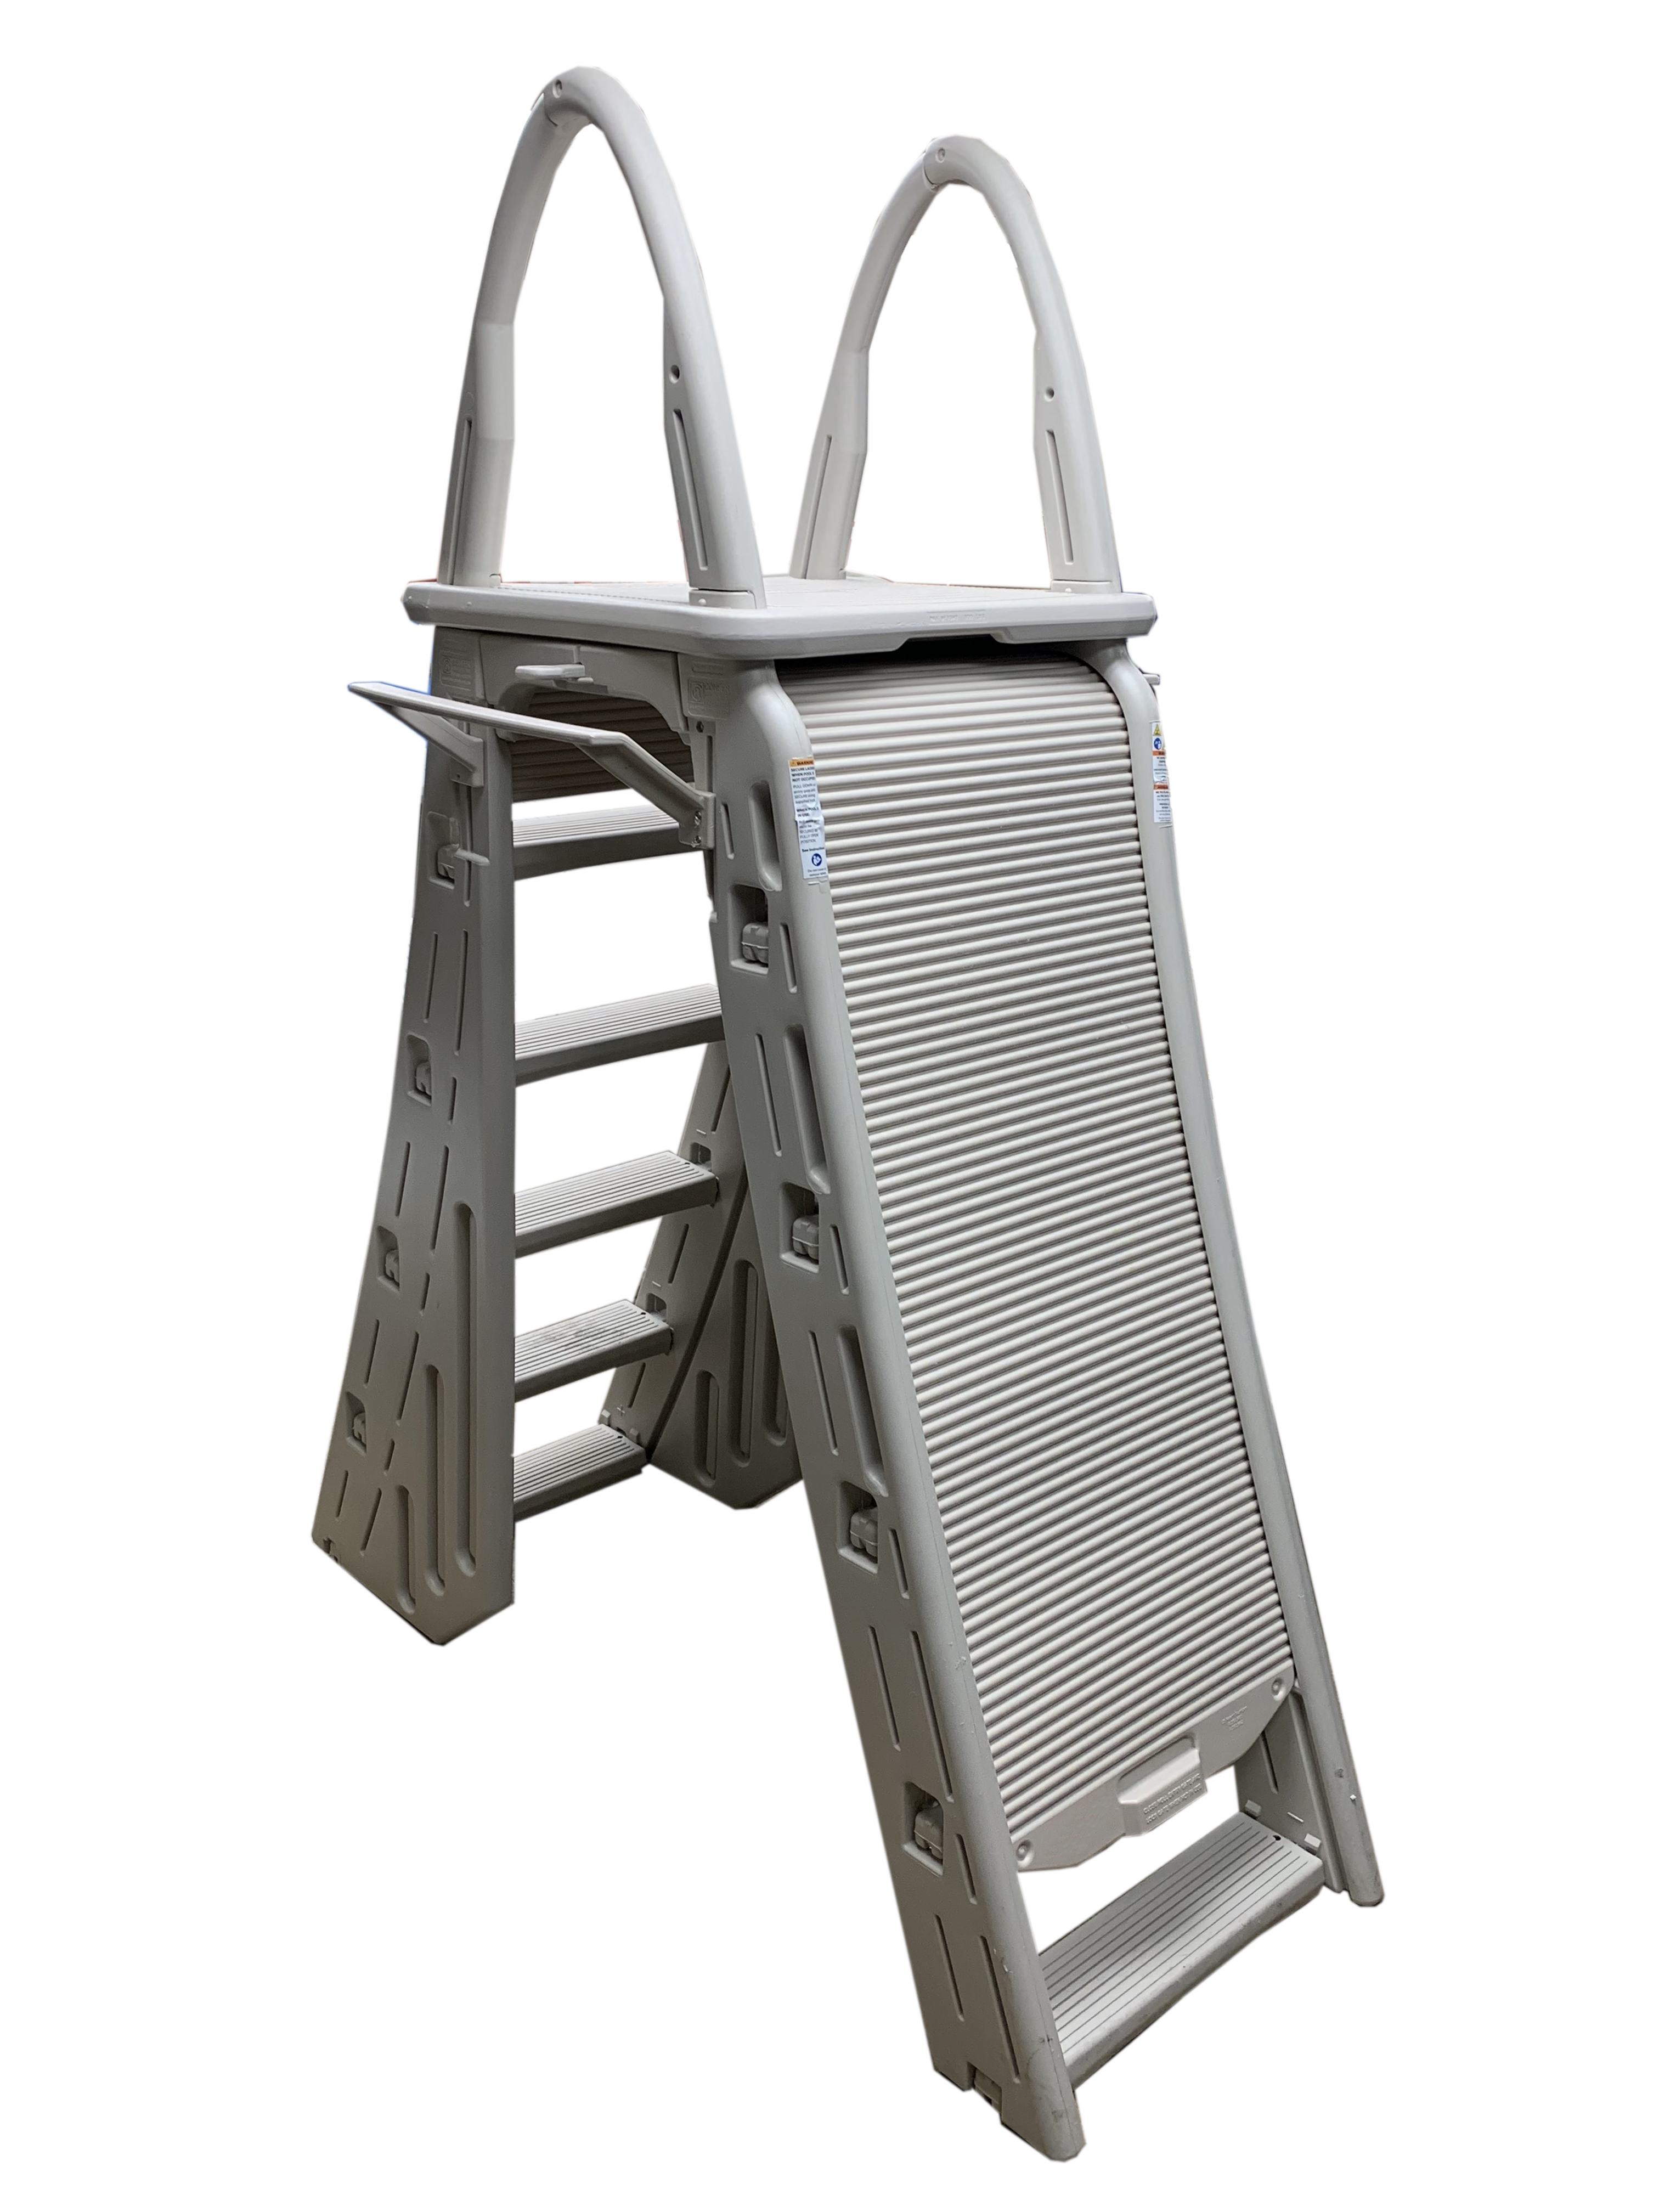 7200 Roll-Guard A-Frame Safety Ladder